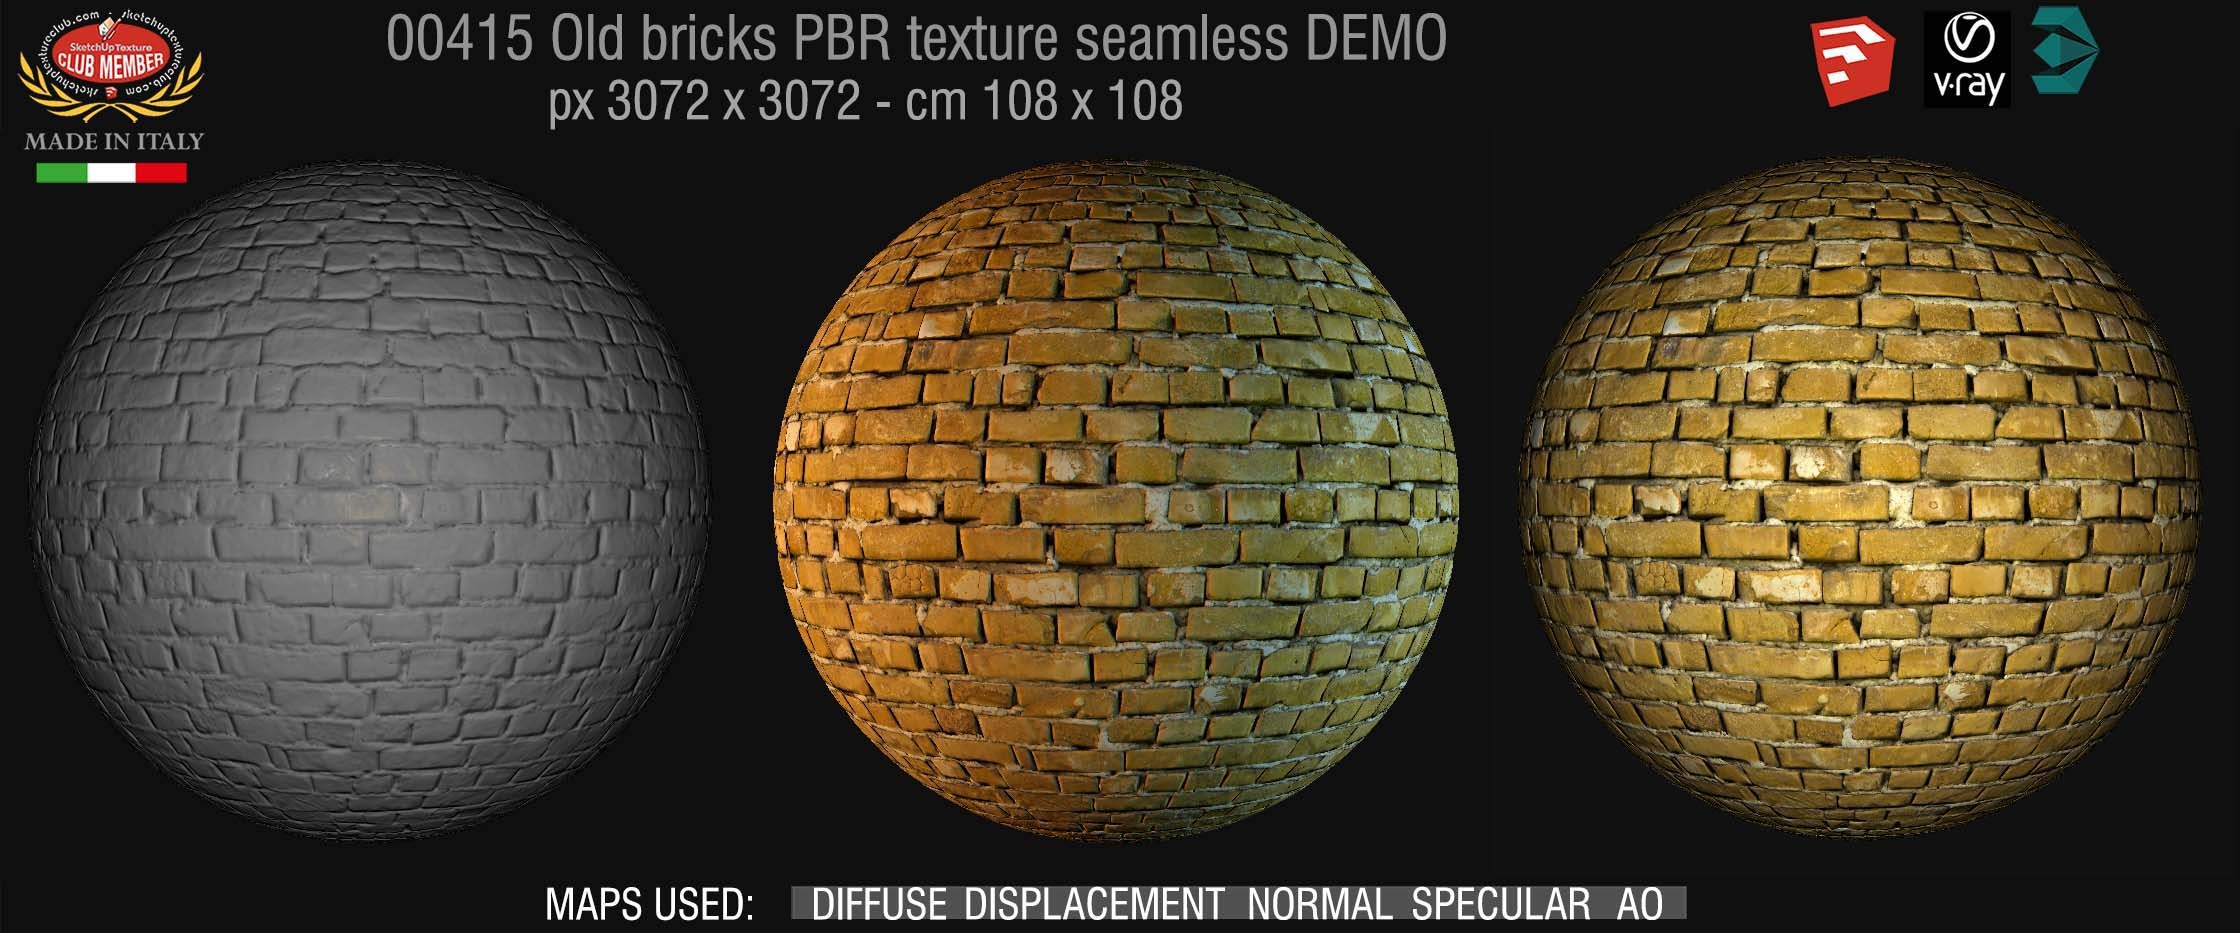 00415 Old bricks PBR texture seamless DEMO